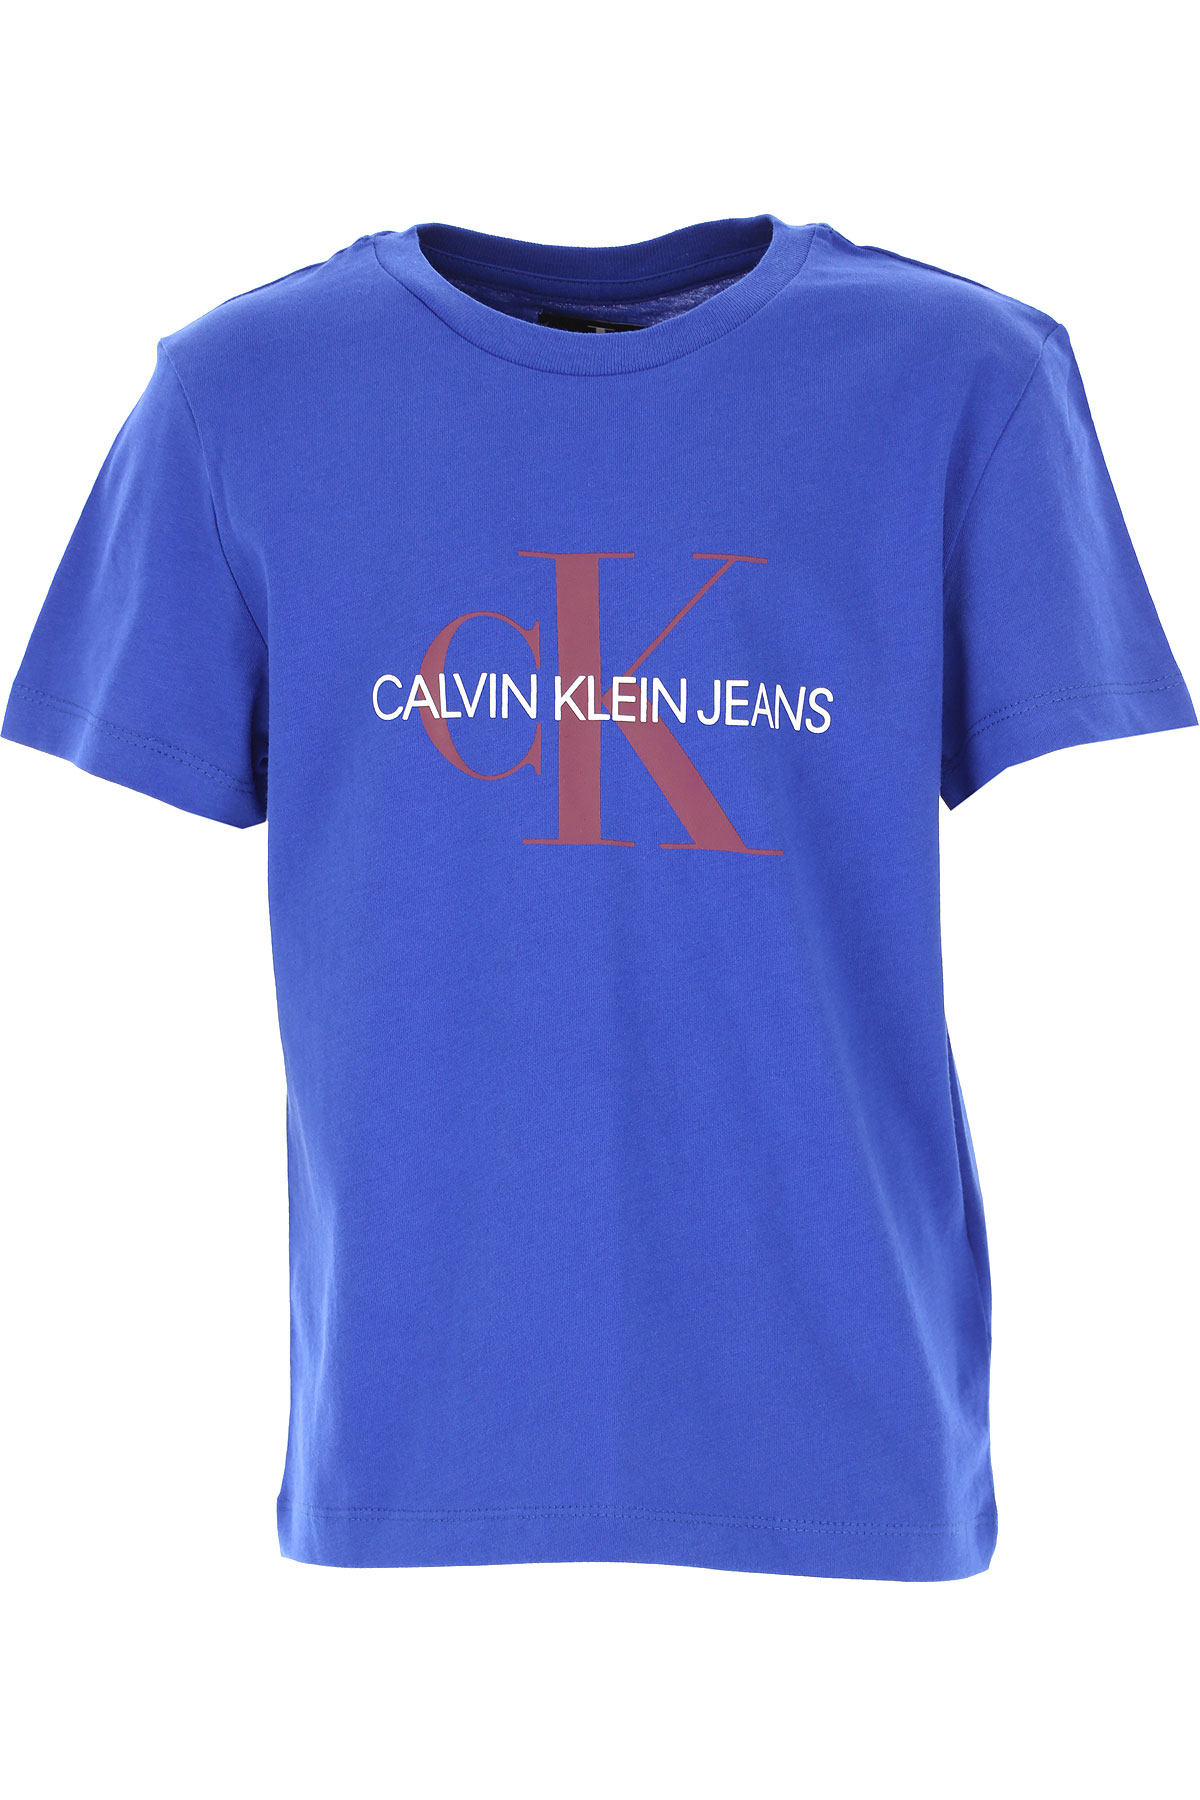 Calvin Klein Kinder T-Shirt für Jungen Günstig im Sale, Blau, Baumwolle, 2017, 10Y 12Y 14Y 16Y 4Y 6Y 8Y